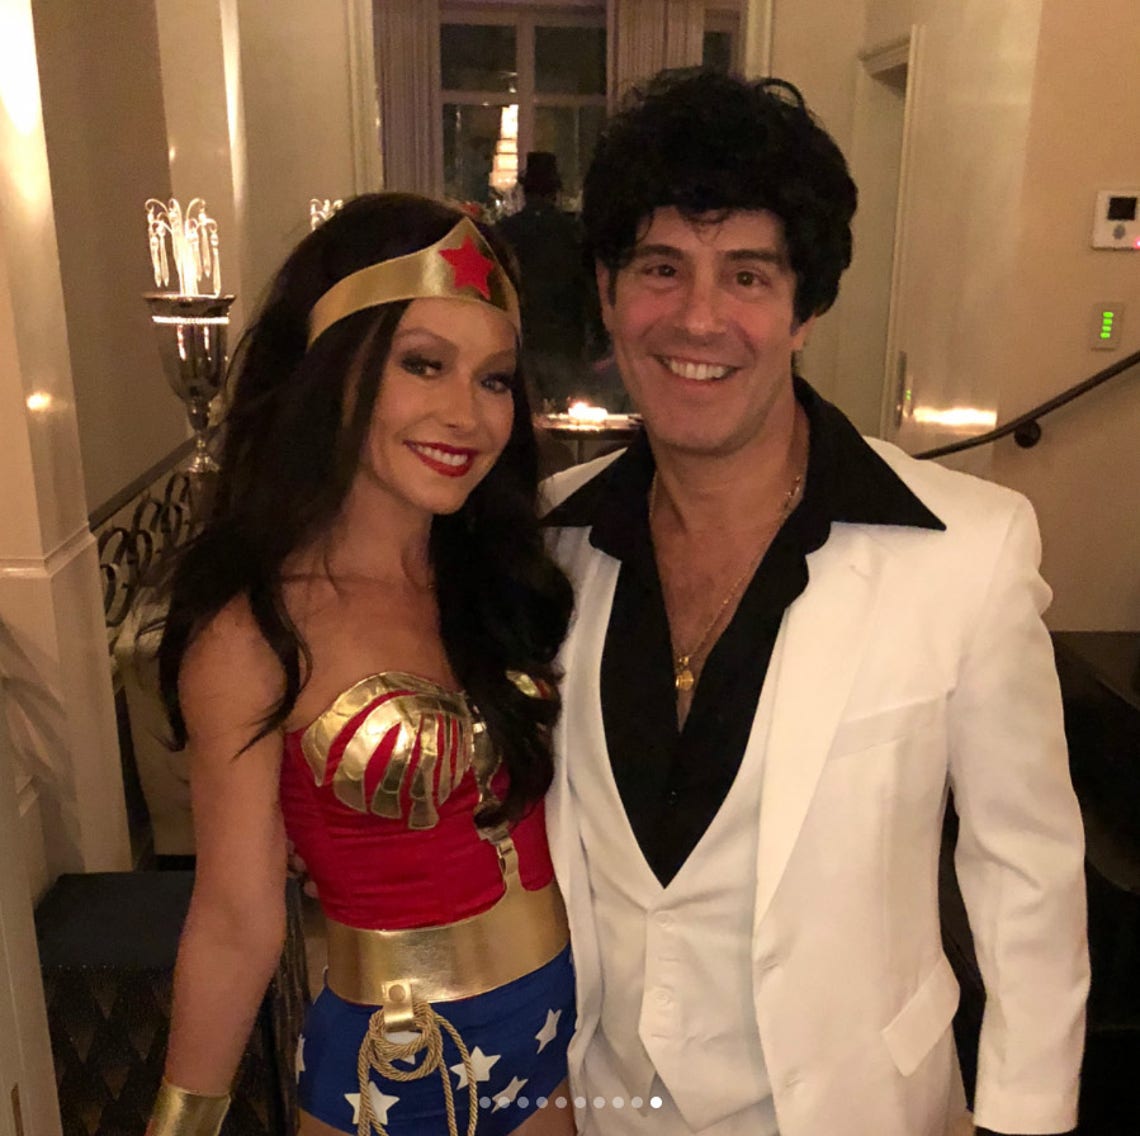 superman couple costume